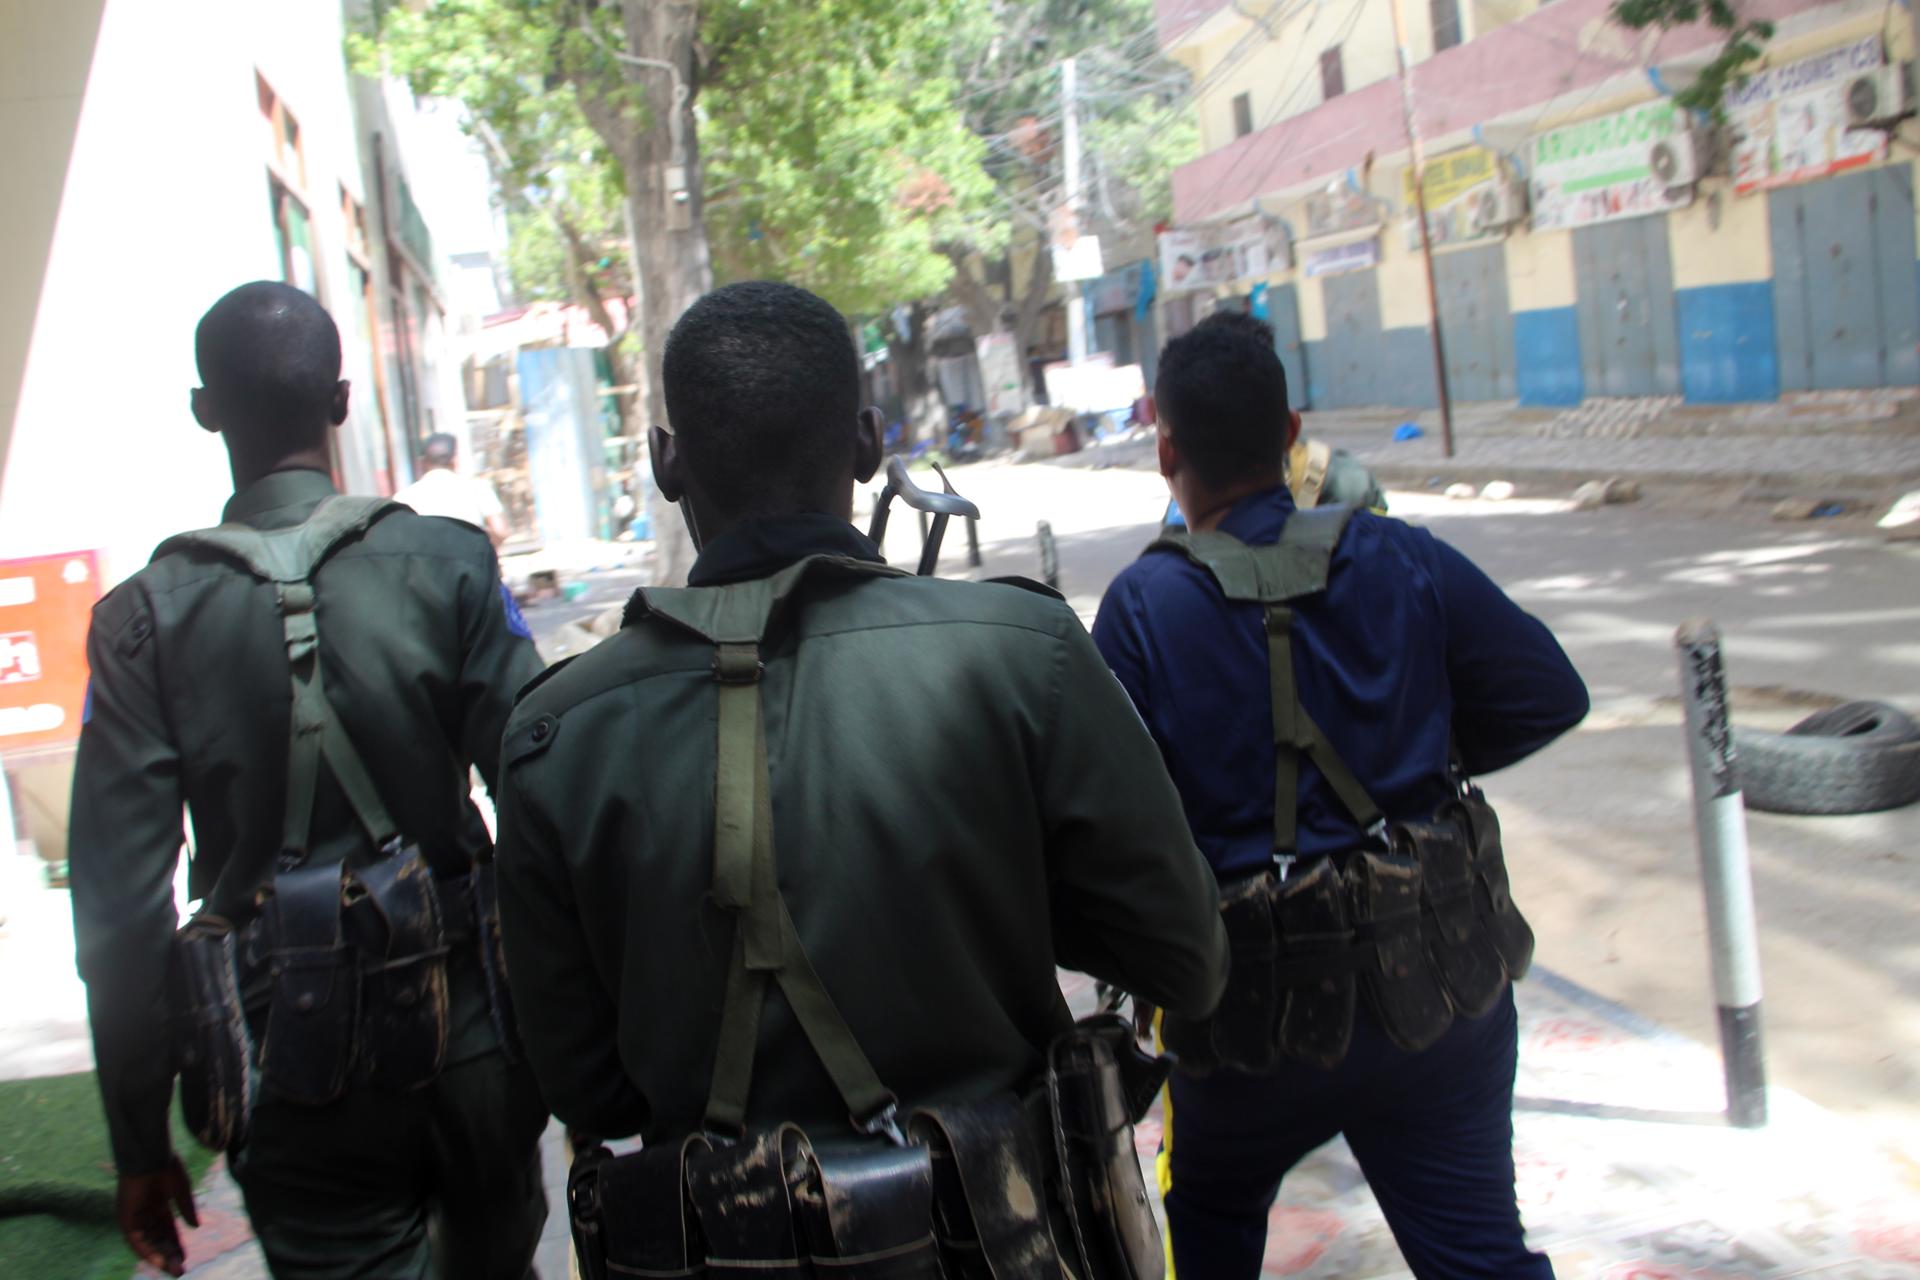 A file picture shows Somali policemen patrolling a street in Mogadishu, Somalia. EFE/EPA/FILE/SAID YUSUF WARSAME